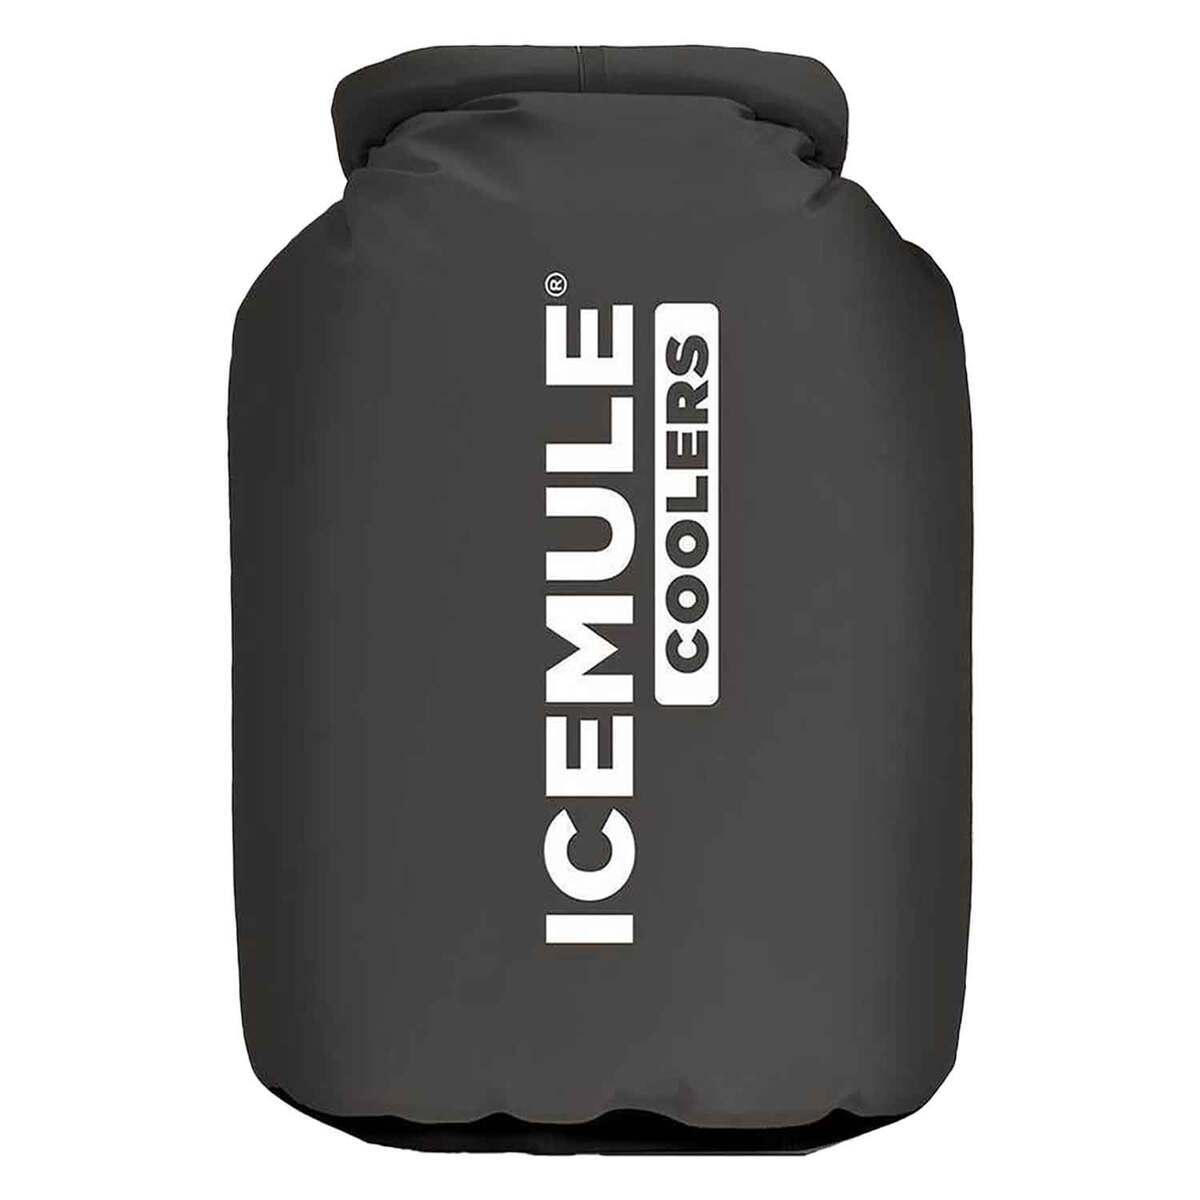 https://www.sportsmans.com/medias/icemule-classic-large-20-liter-backpack-cooler-black-1728914-1.jpg?context=bWFzdGVyfGltYWdlc3wzNTkyN3xpbWFnZS9qcGVnfGg2MS9oN2IvMTA1NDYwODgyMTQ1NTgvMTcyODkxNC0xX2Jhc2UtY29udmVyc2lvbkZvcm1hdF8xMjAwLWNvbnZlcnNpb25Gb3JtYXR8NjZhNGM0MDI1MDk5ODUyMDNjYjJhYjM3NjNmOGYzMjNjMjY1NWZlZDMyMzg1NjY3MzhlOGI5N2I4MDMzYzc2Mw